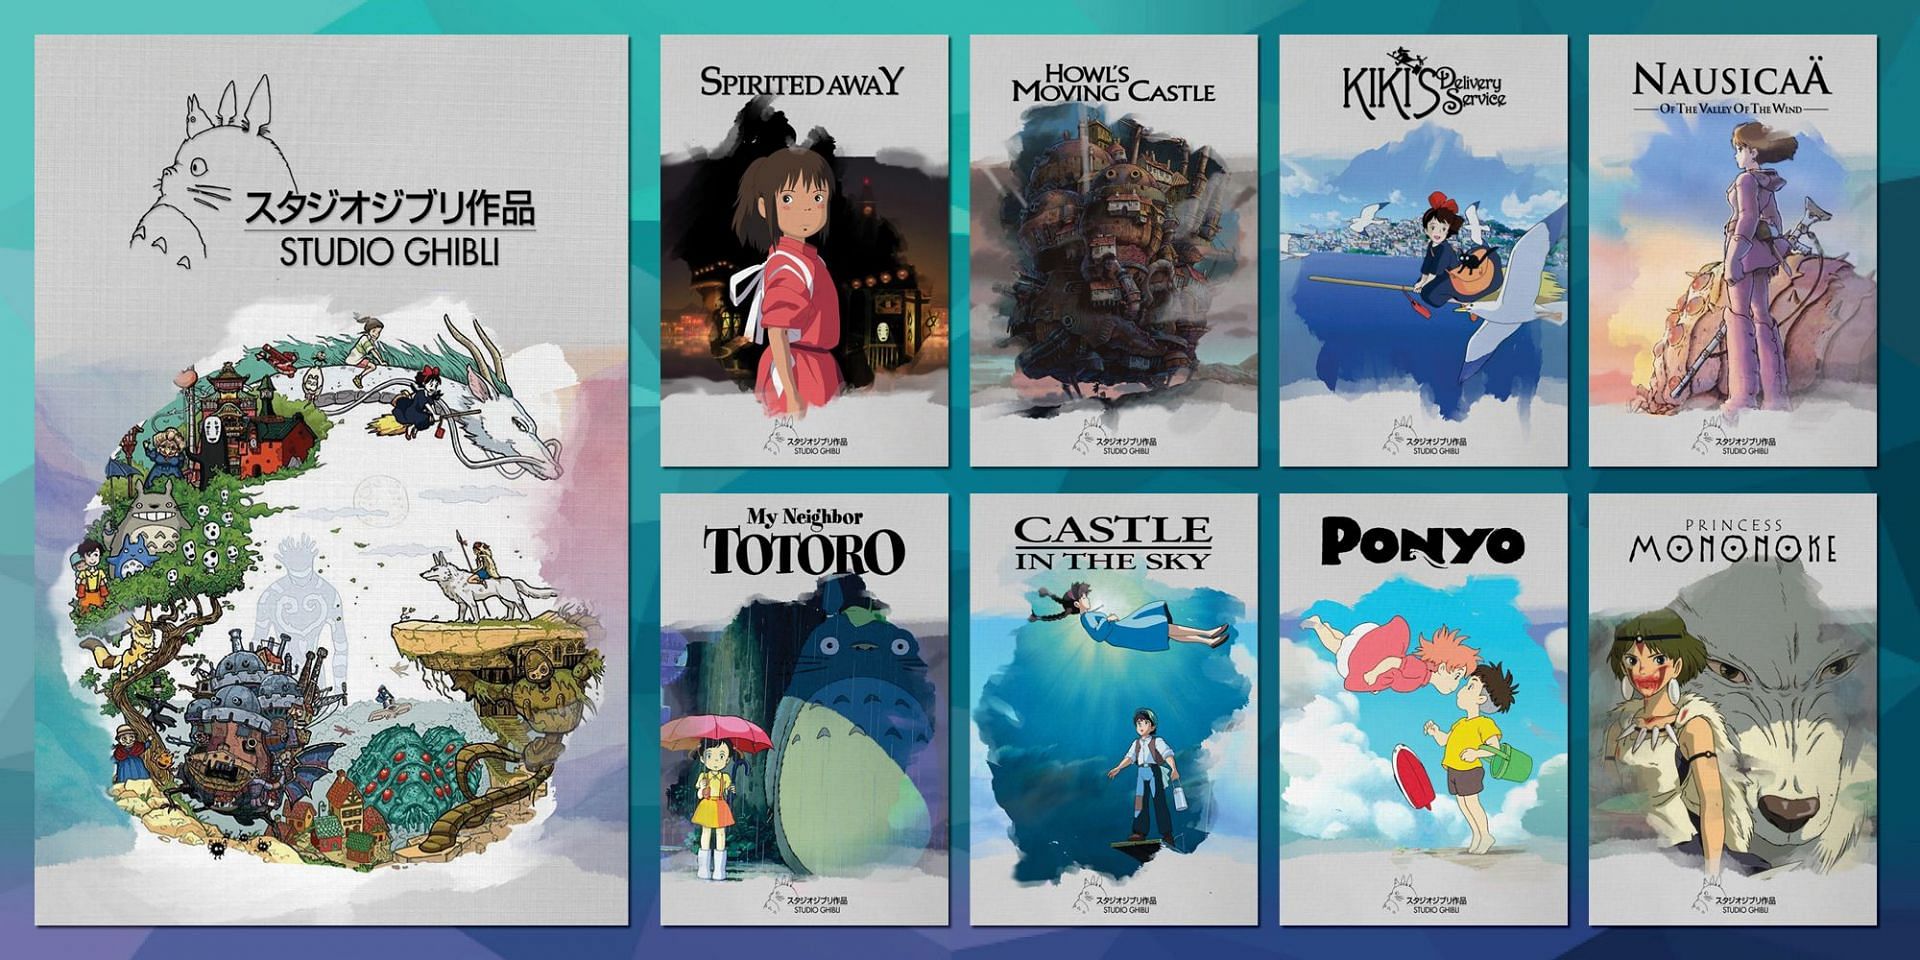 10 anime films for newcomer fans